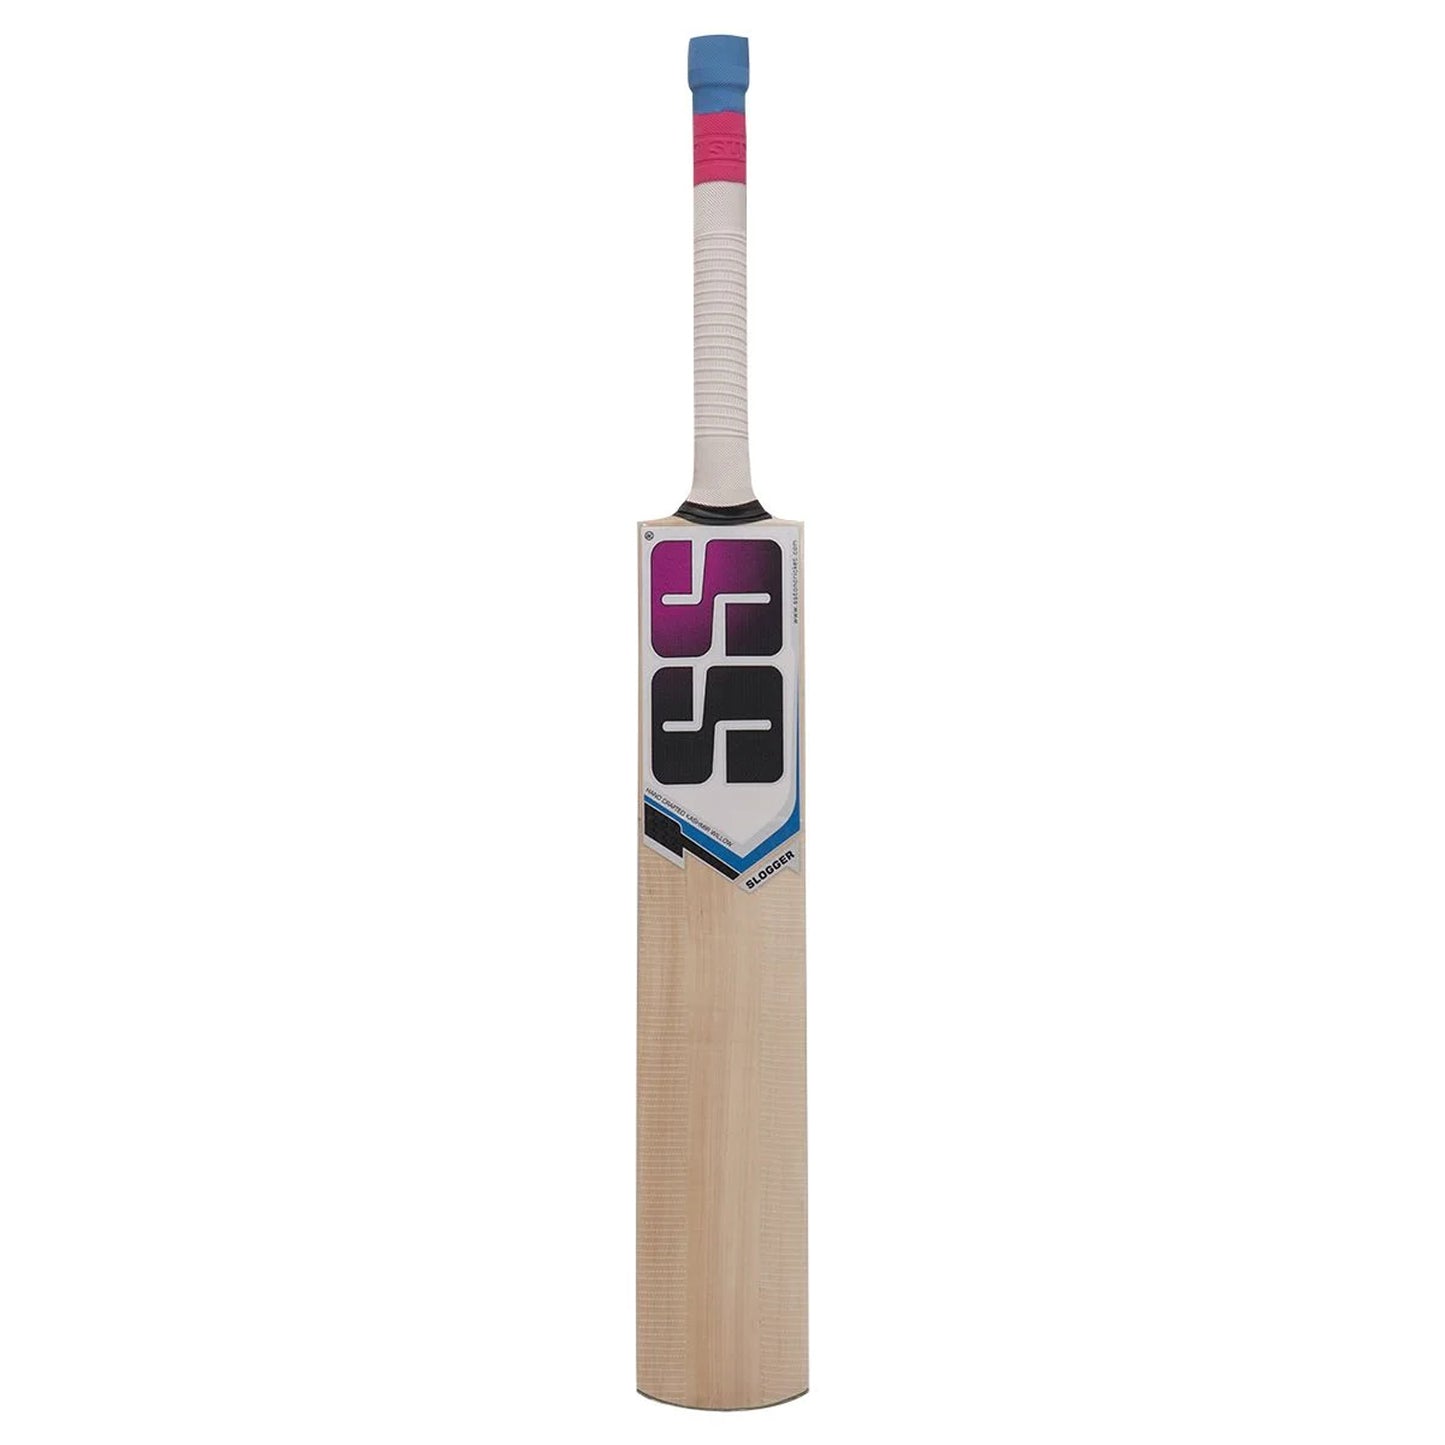 SS Slogger Kashmir Willow Cricket Bat - Best Price online Prokicksports.com